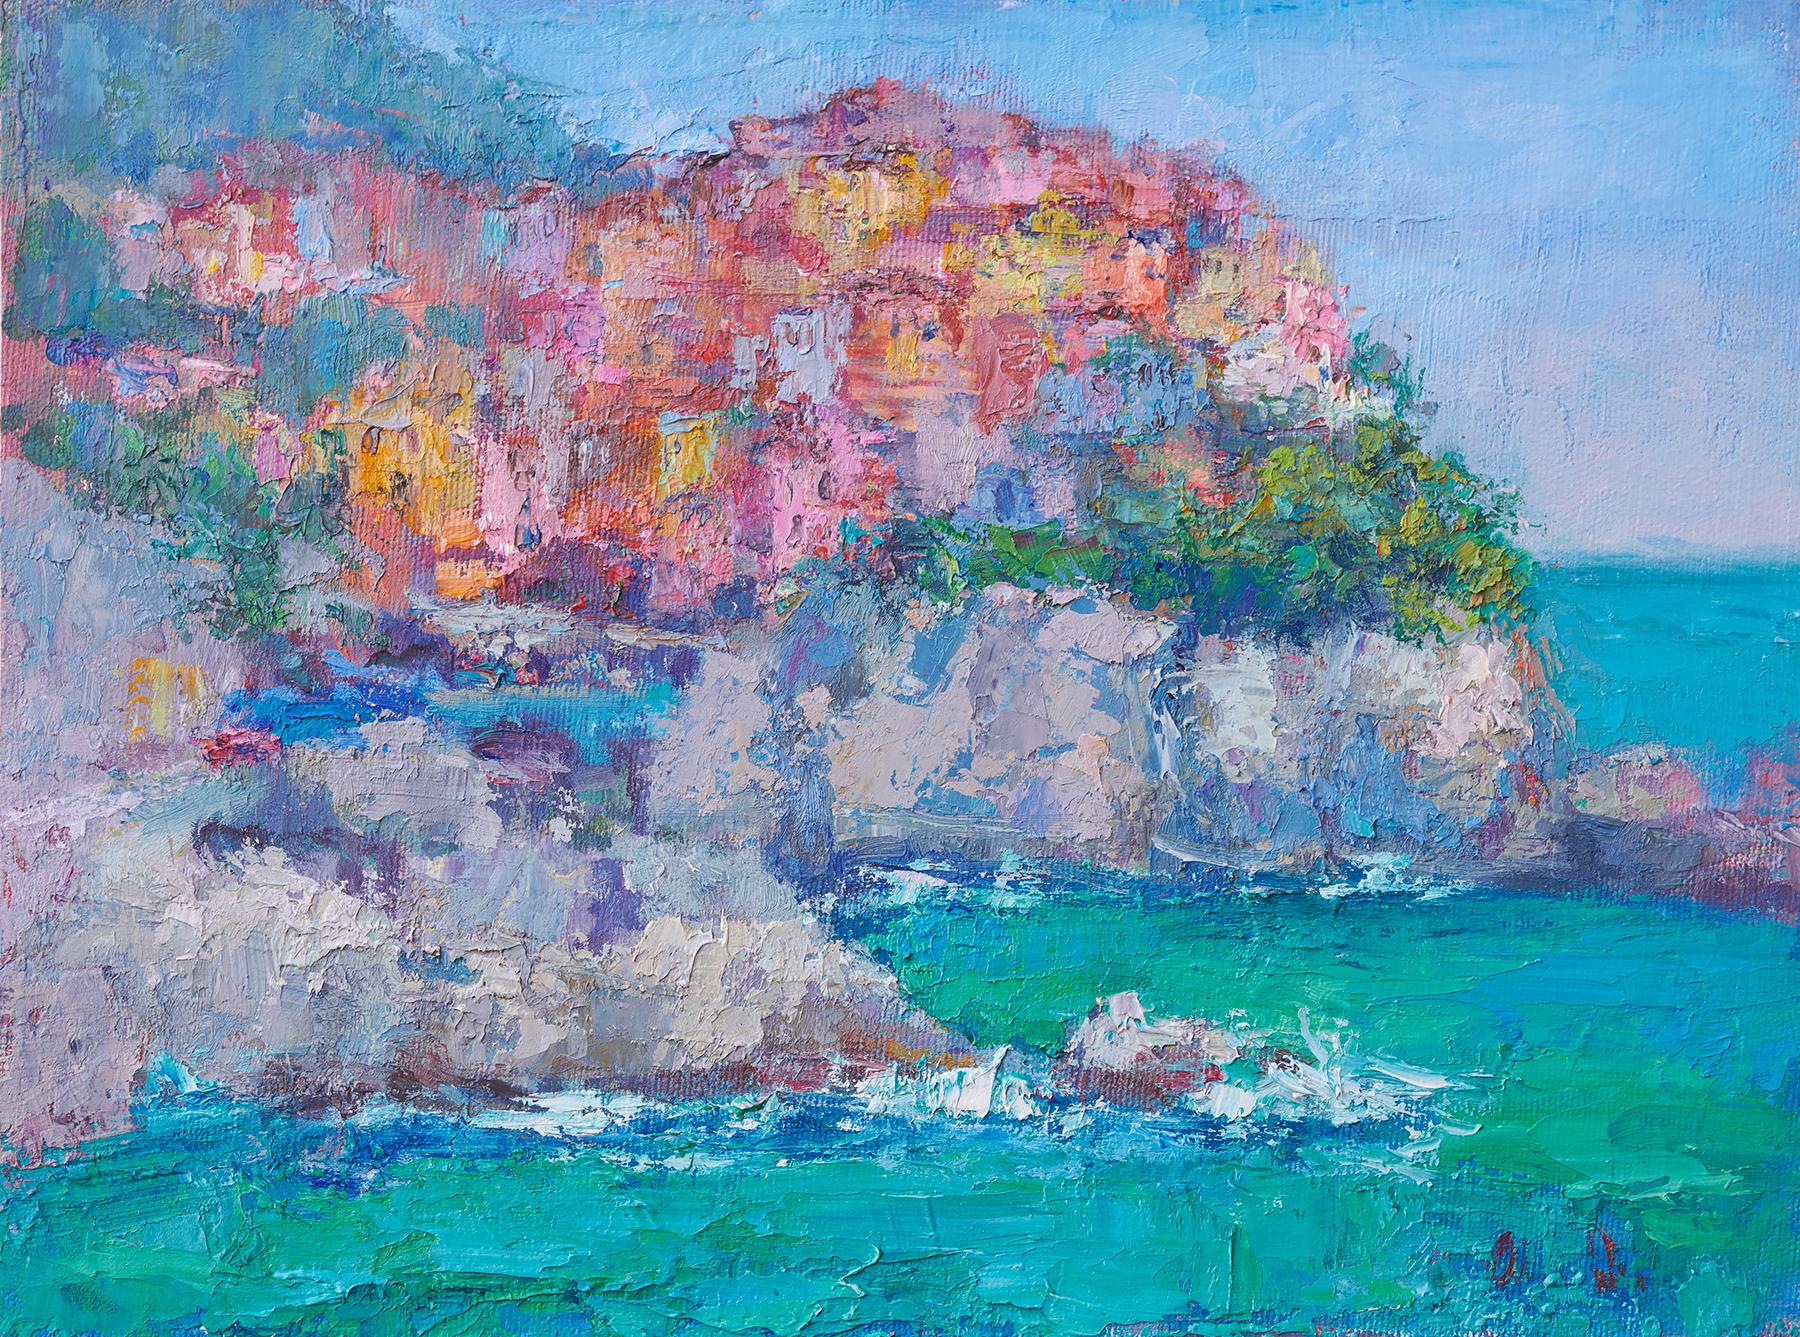 Oksana Johnson Landscape Painting - The Village by the Sea, Oil Painting